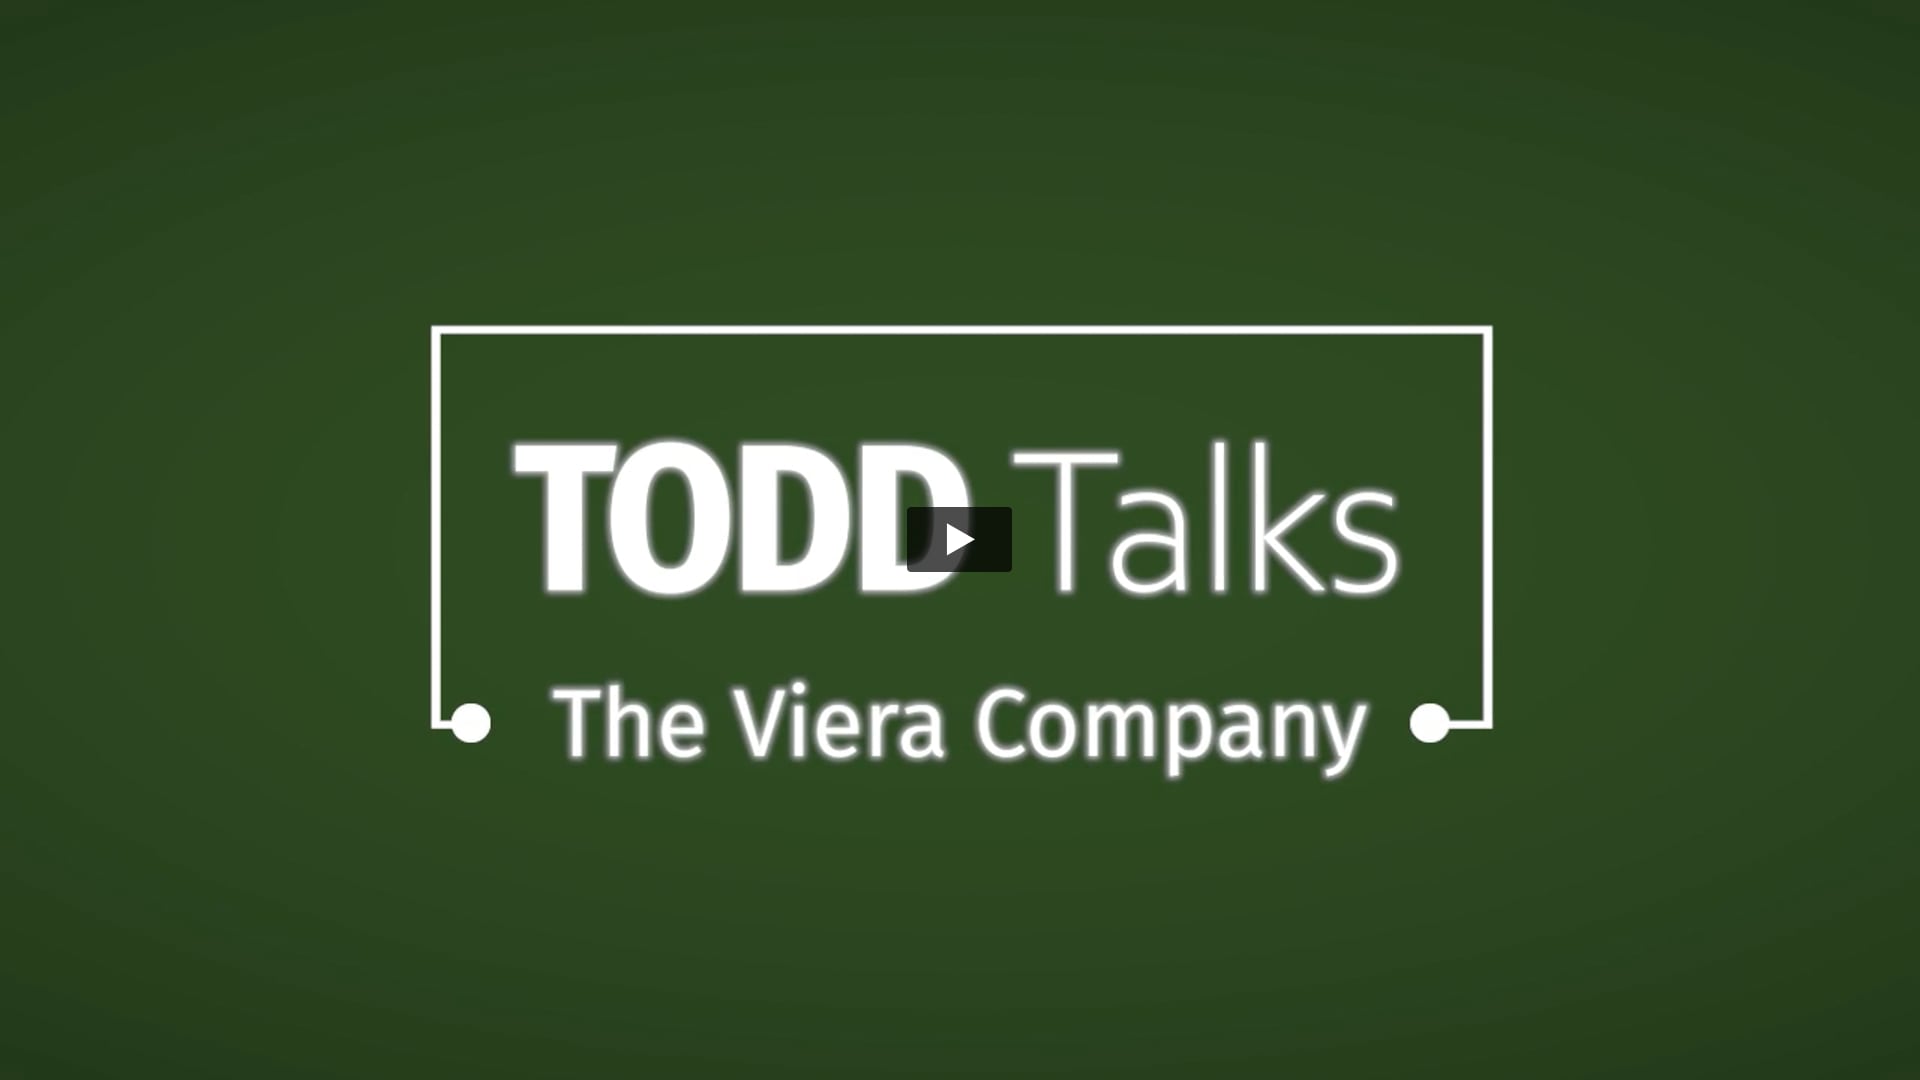 Todd Talks - The Viera Company